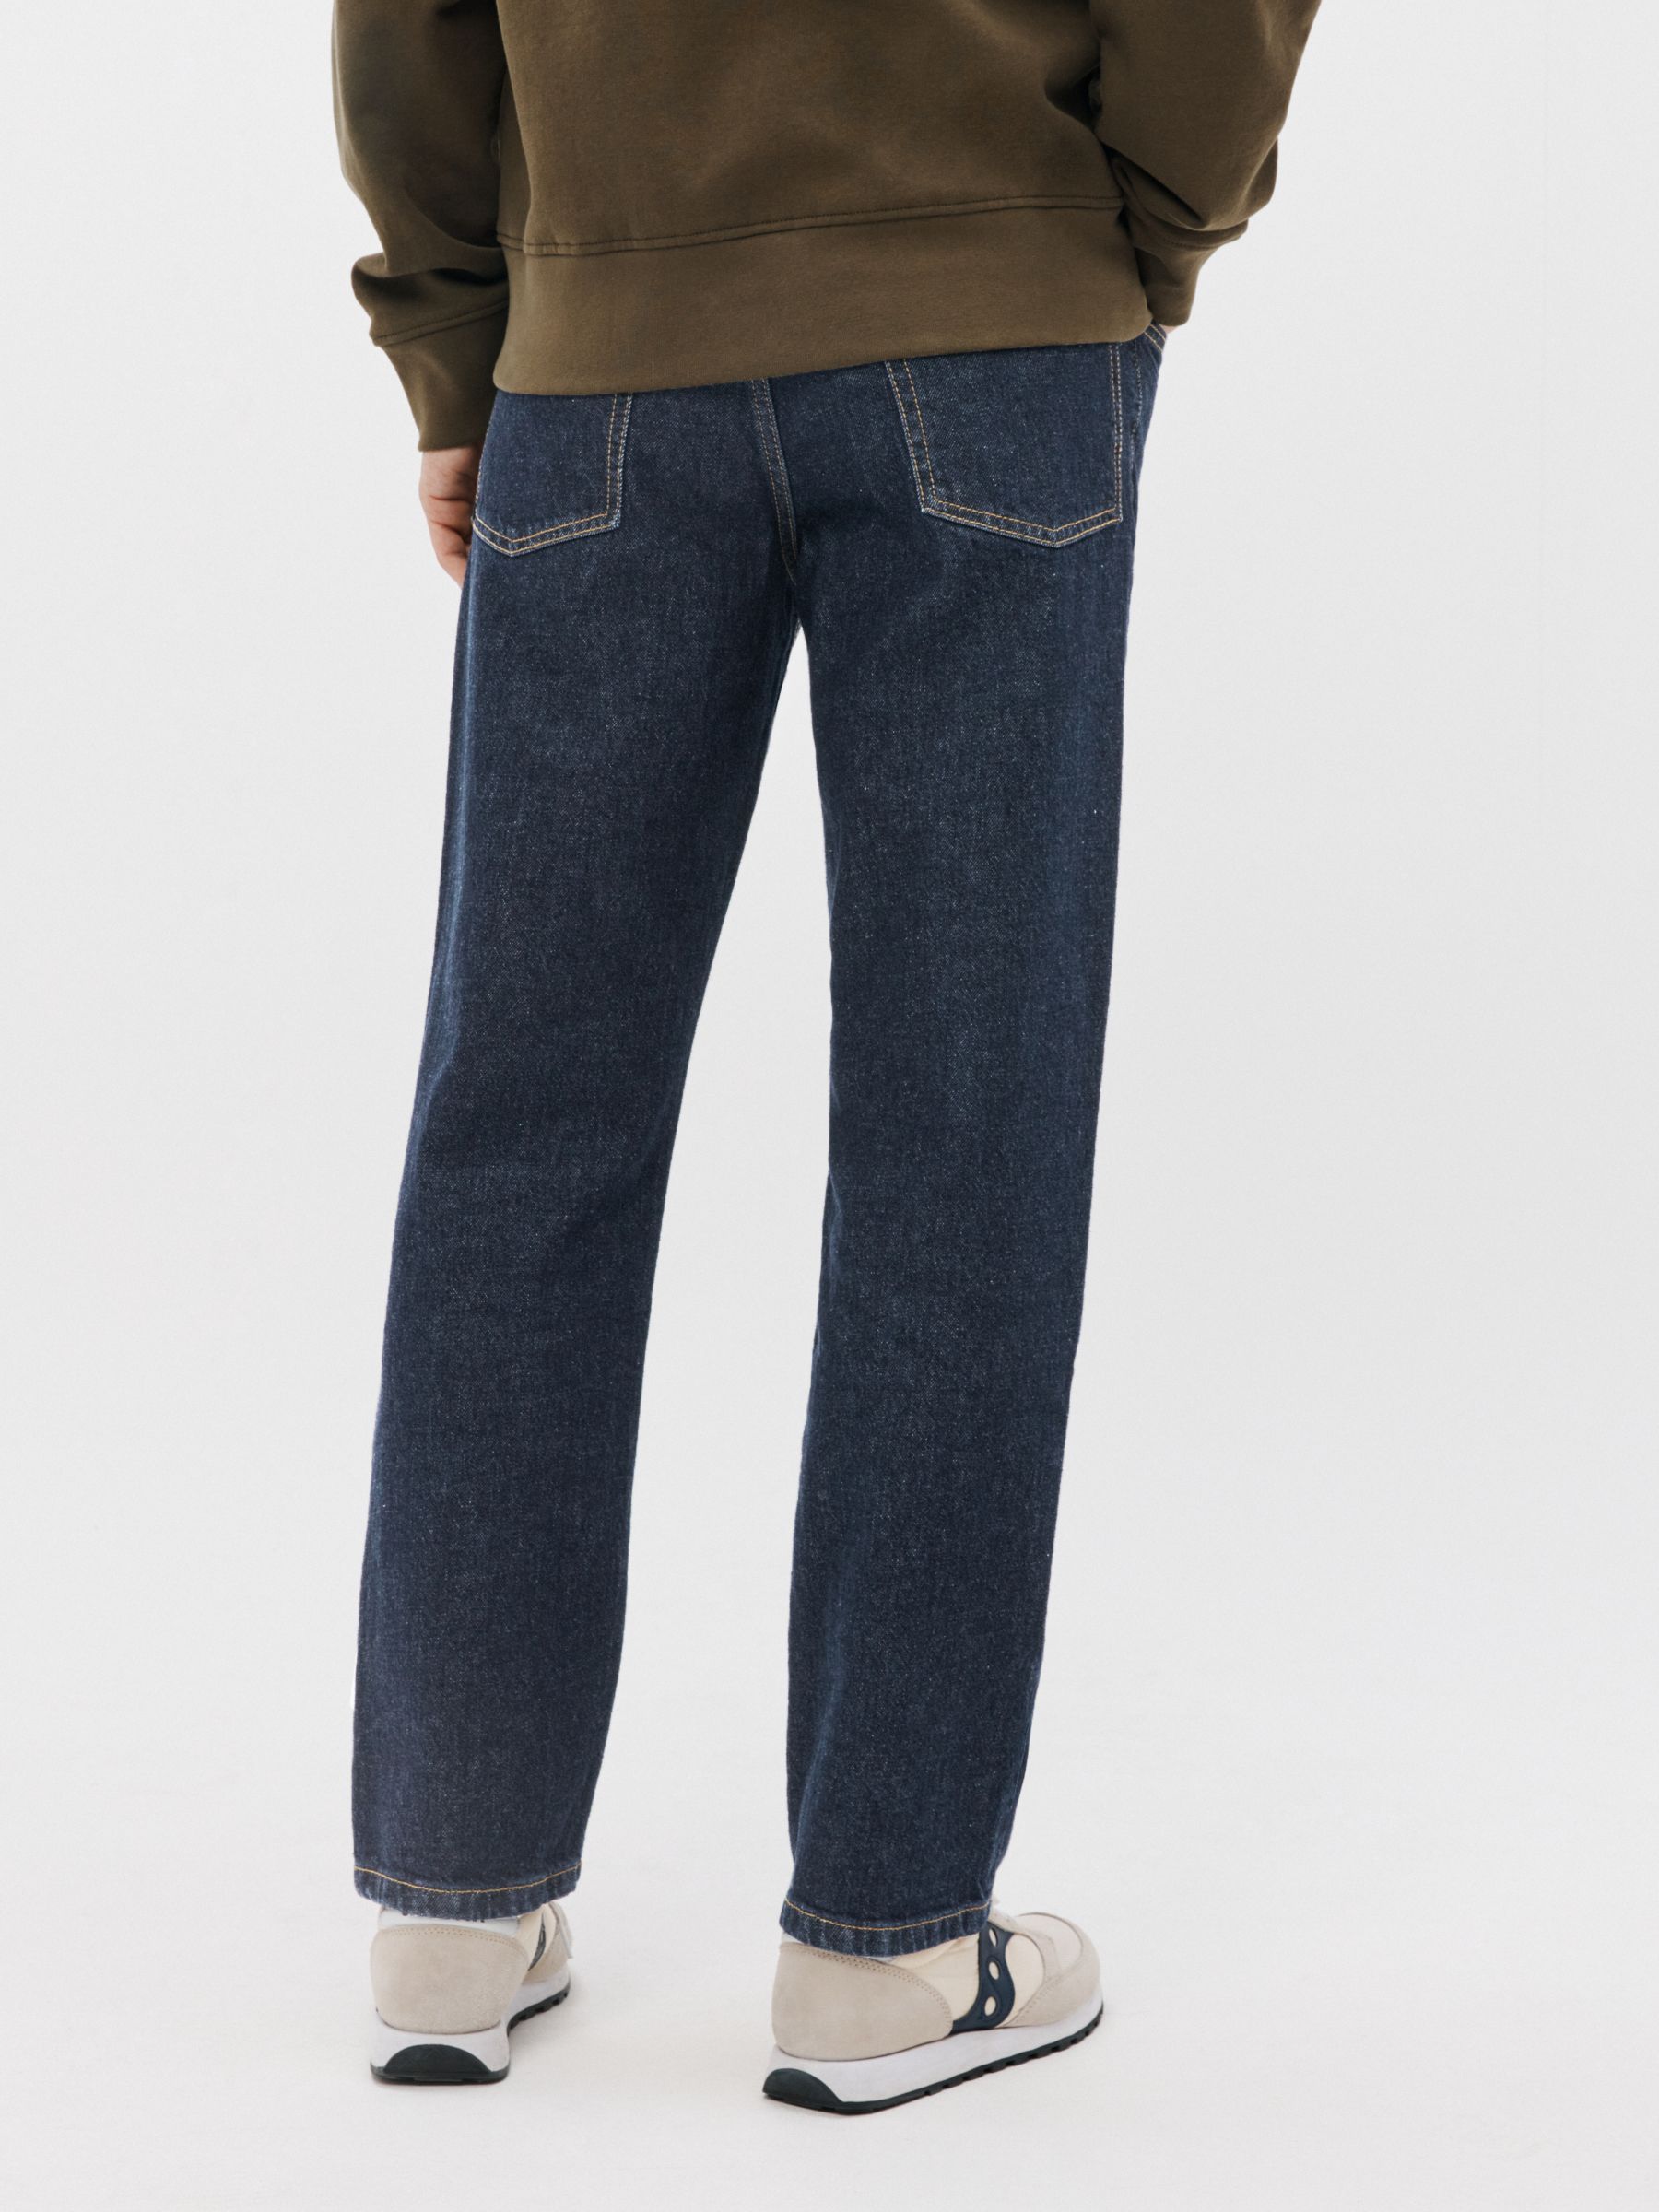 Buy John Lewis ANYDAY Straight Fit Denim Jeans, Dark Wash Online at johnlewis.com